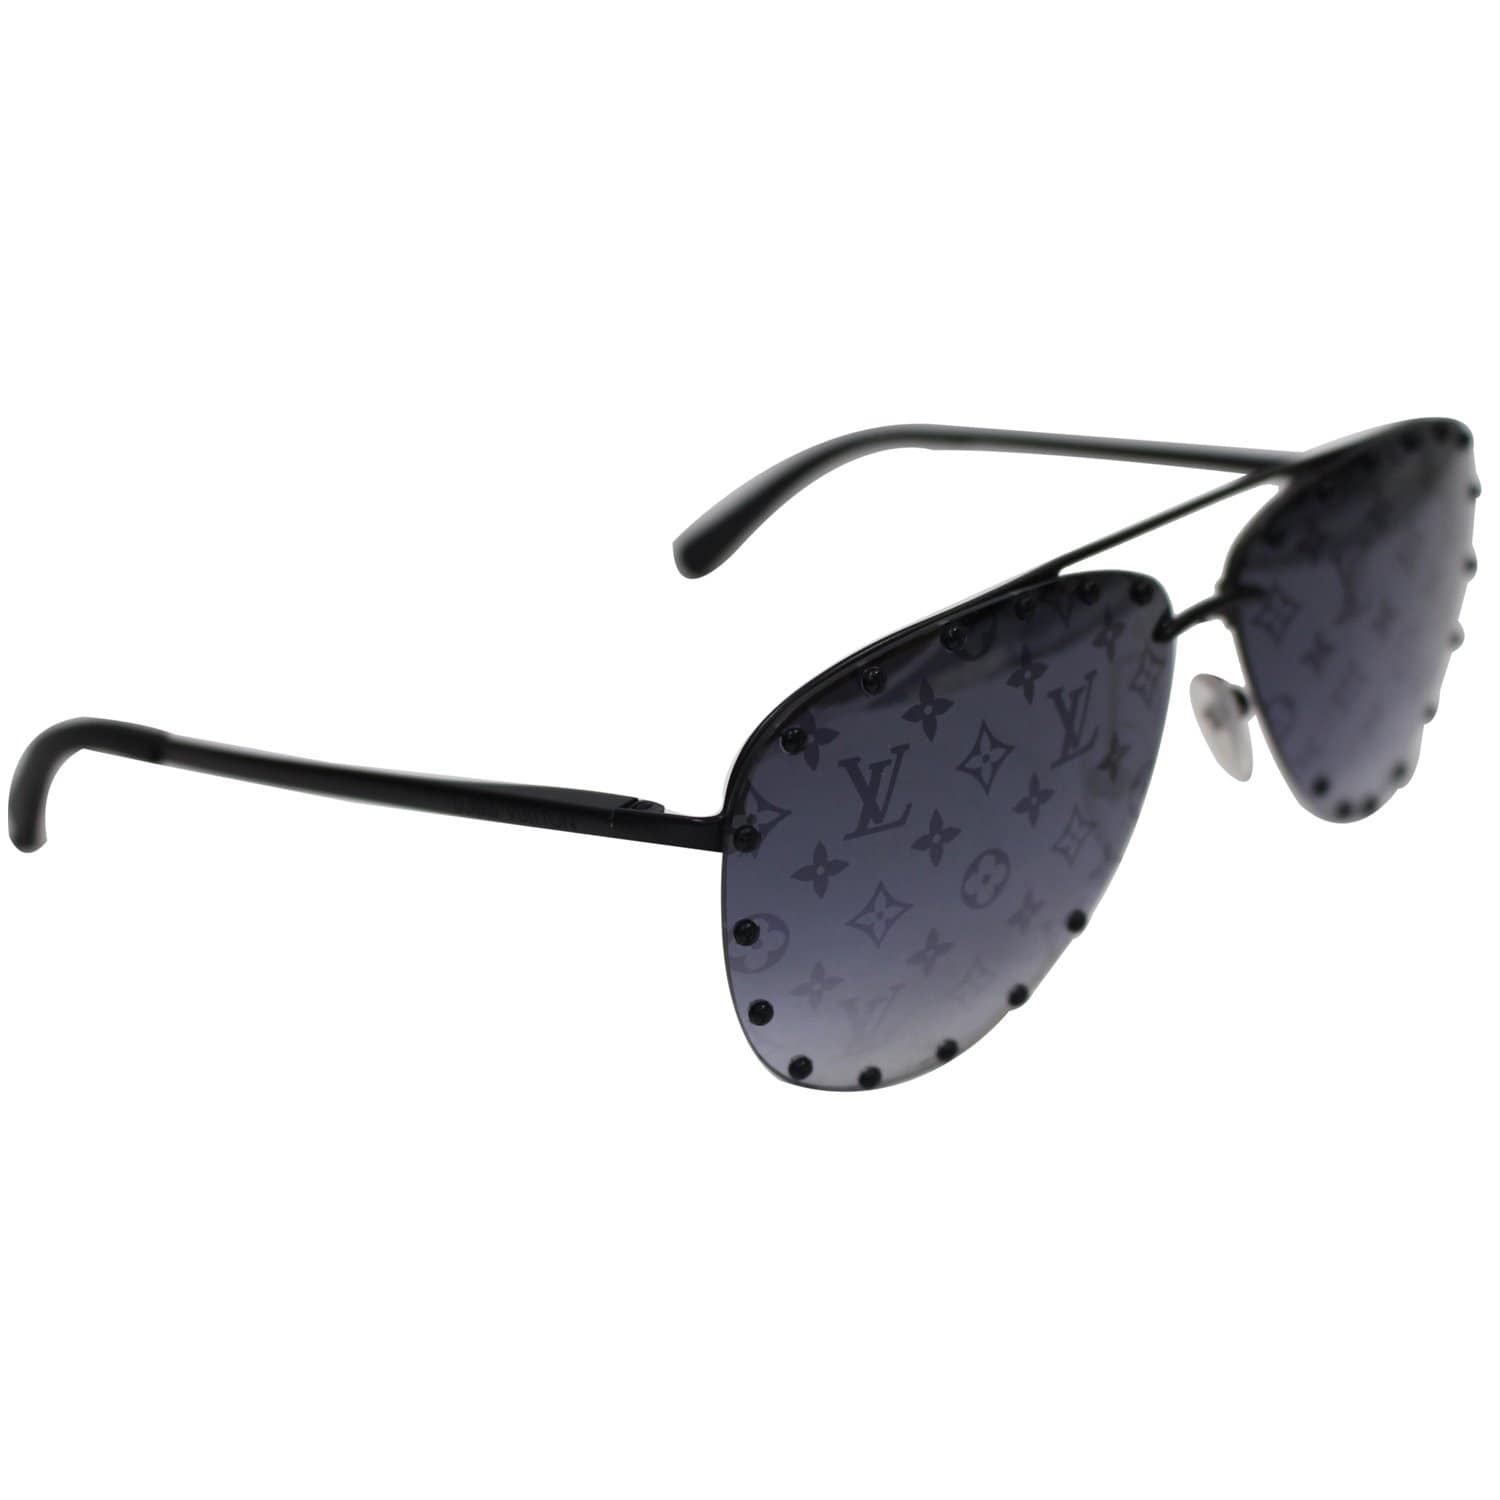 lv monogram sunglasses